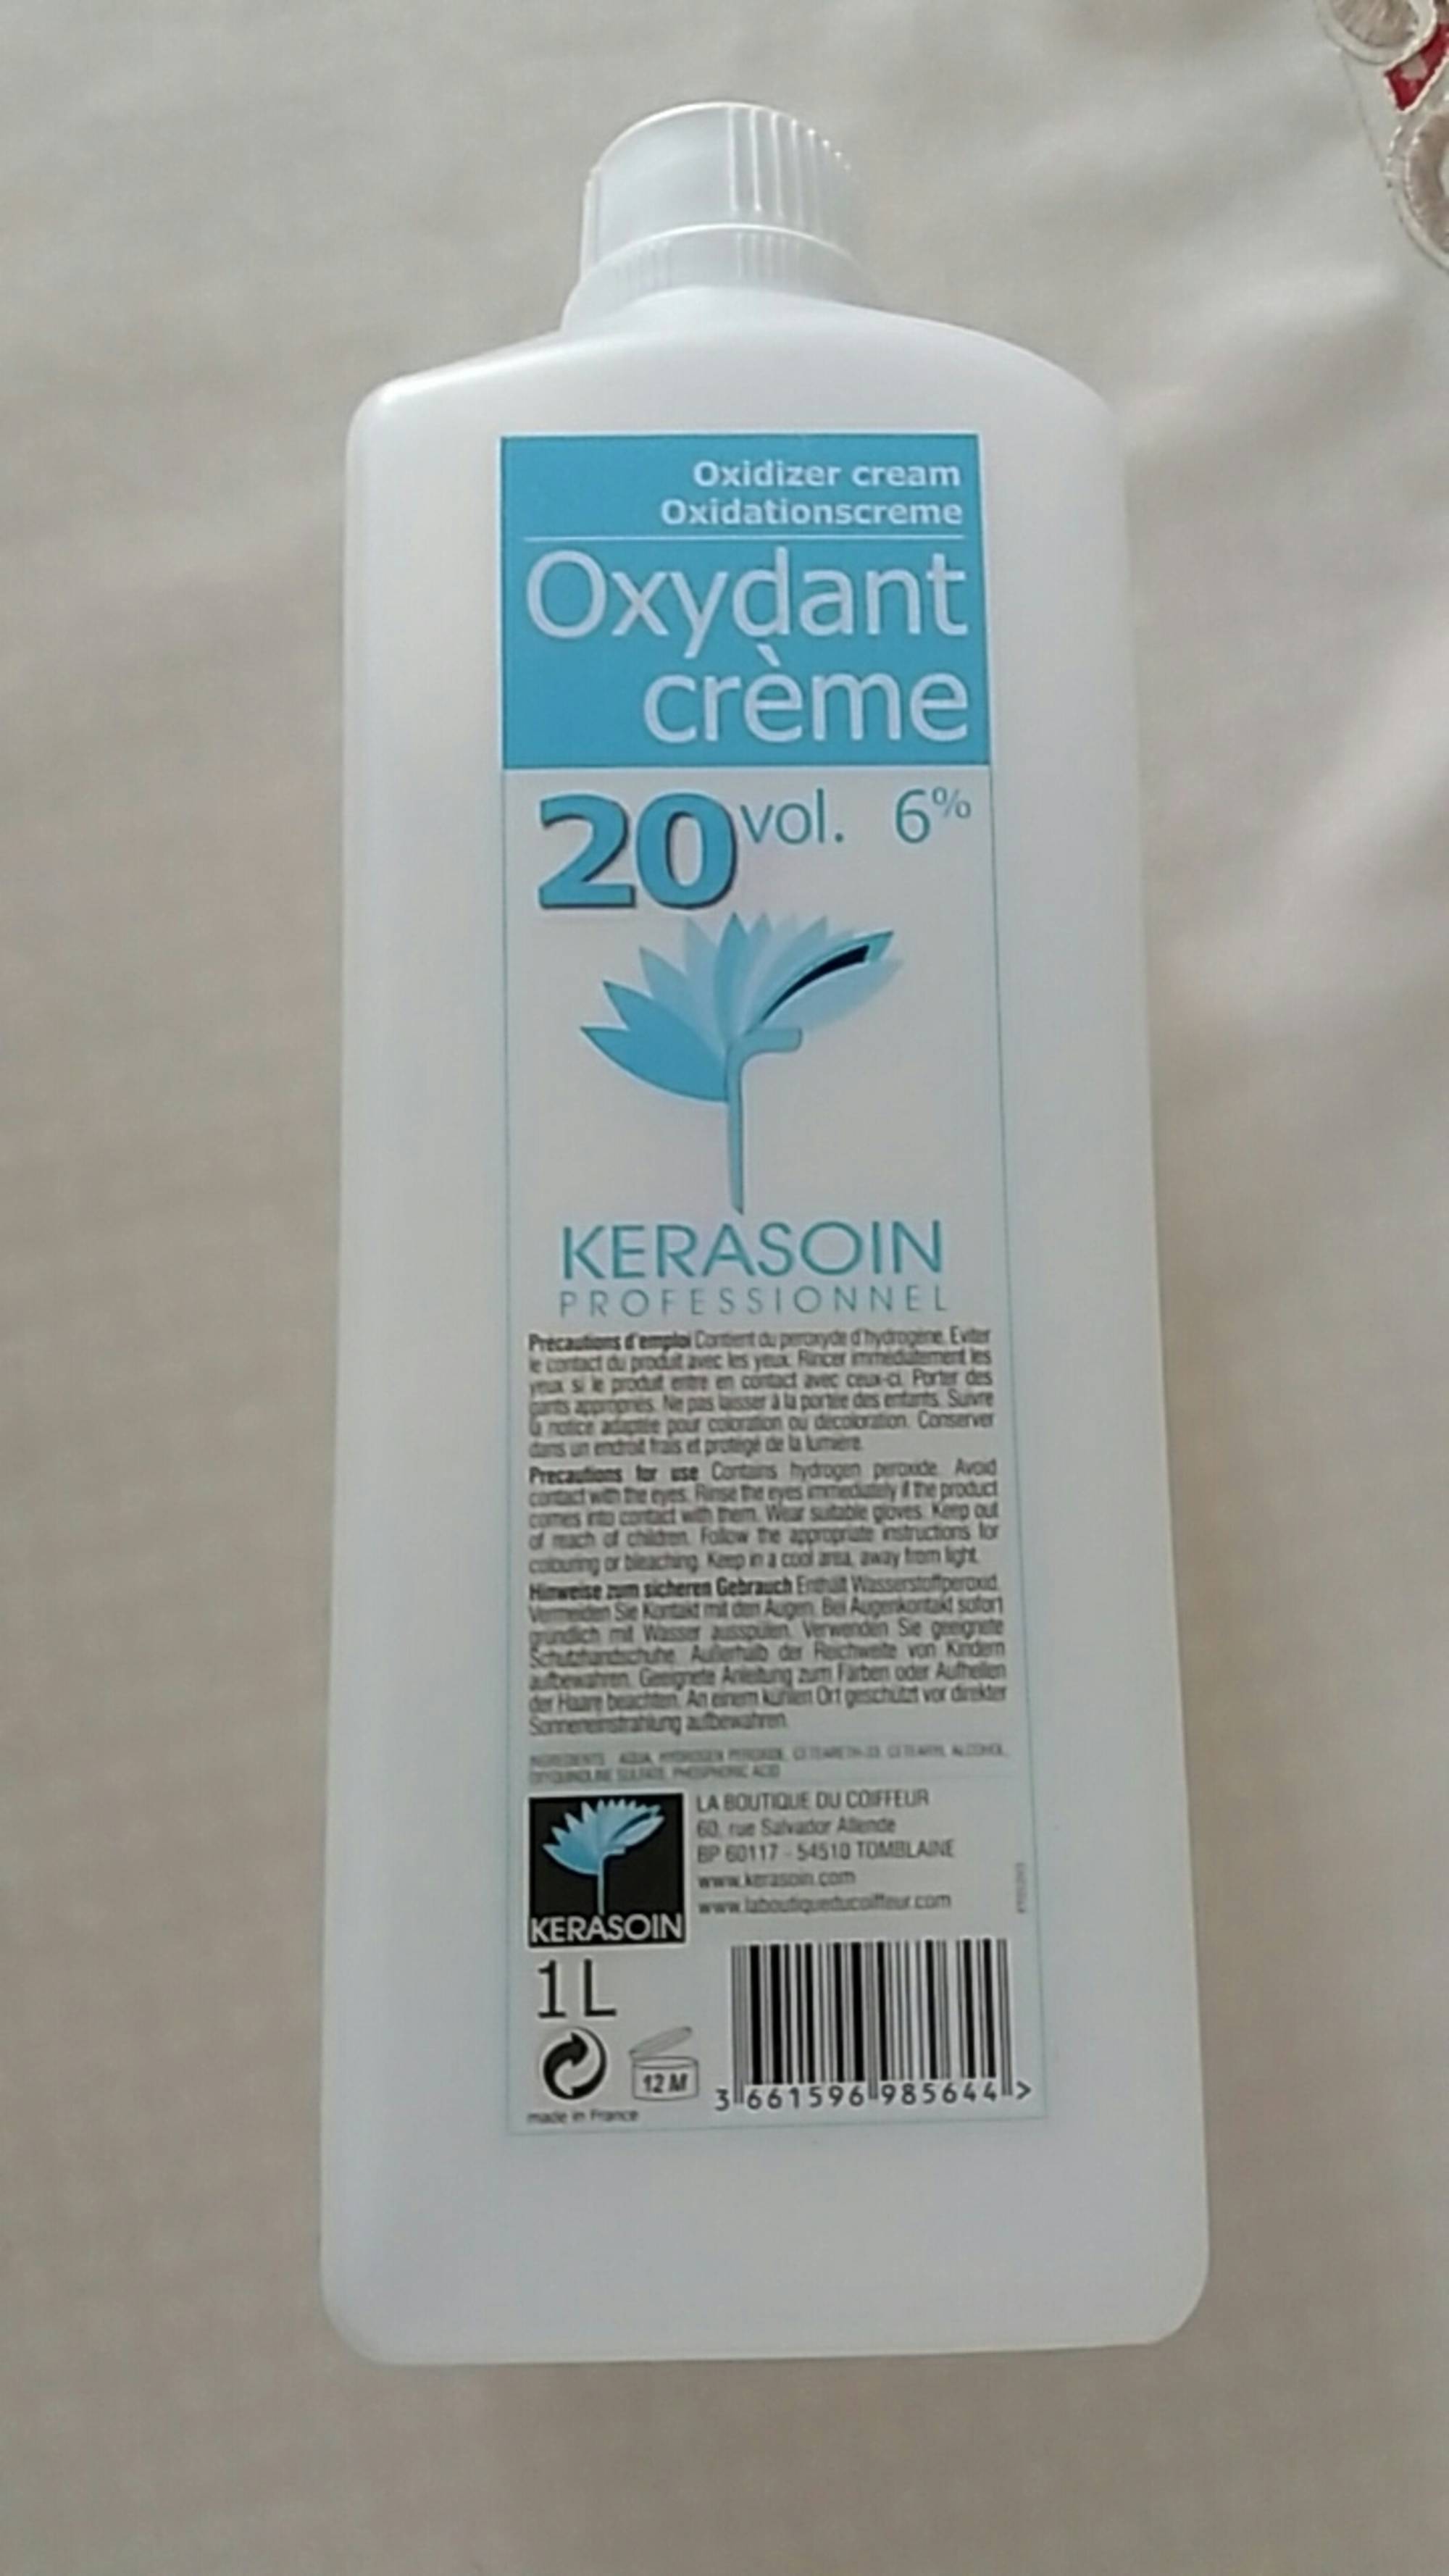 KERASOIN PROFESSIONNEL - Oxydant crème 20 vol